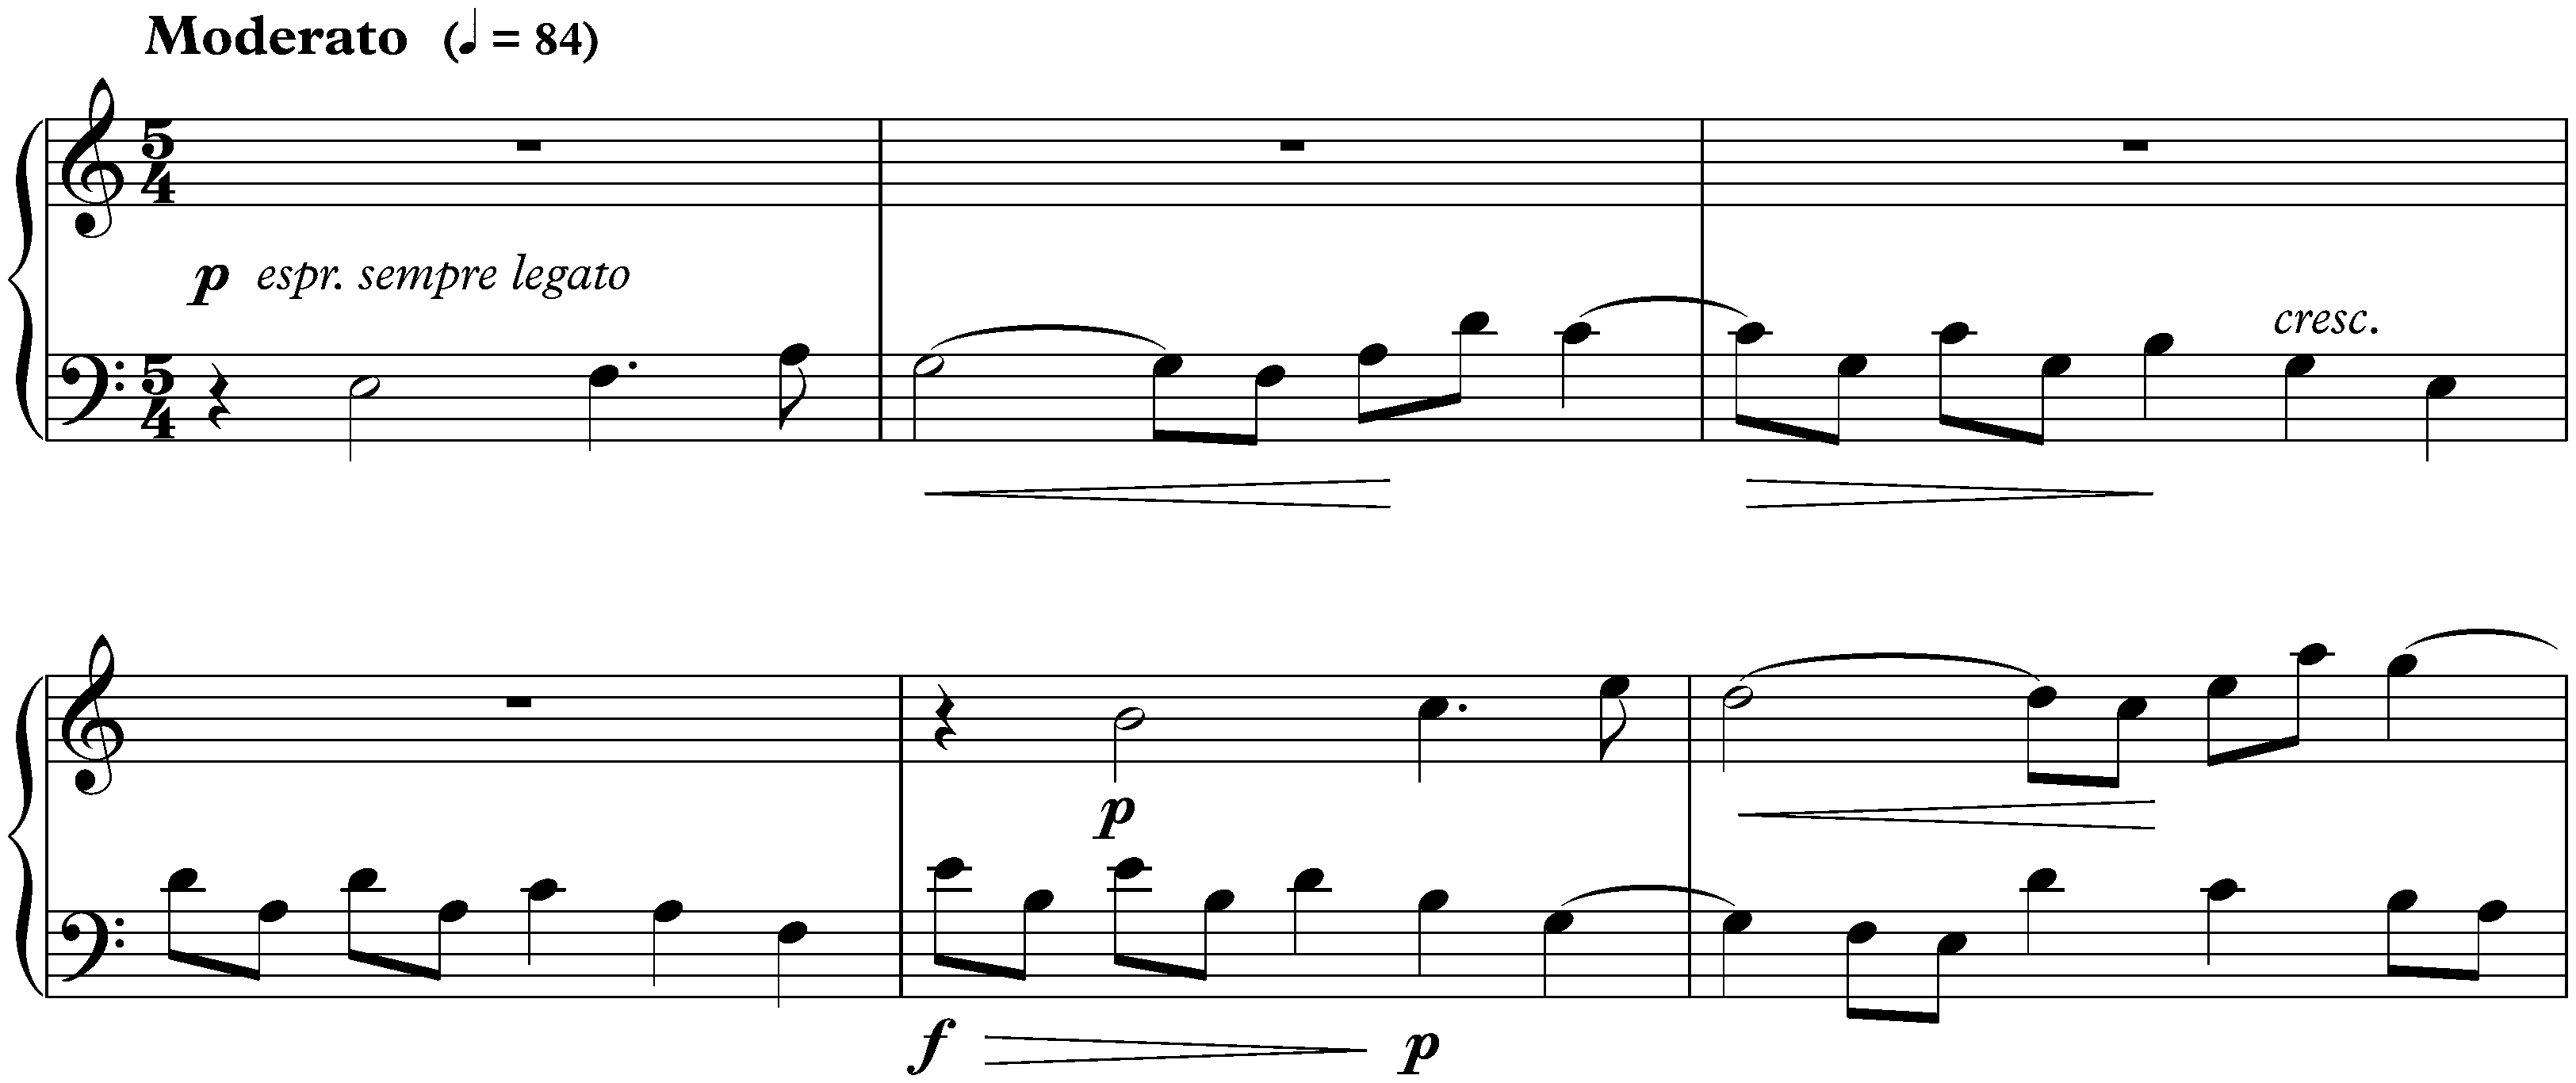 Twenty-four Preludes, op. 34; 4. E minor